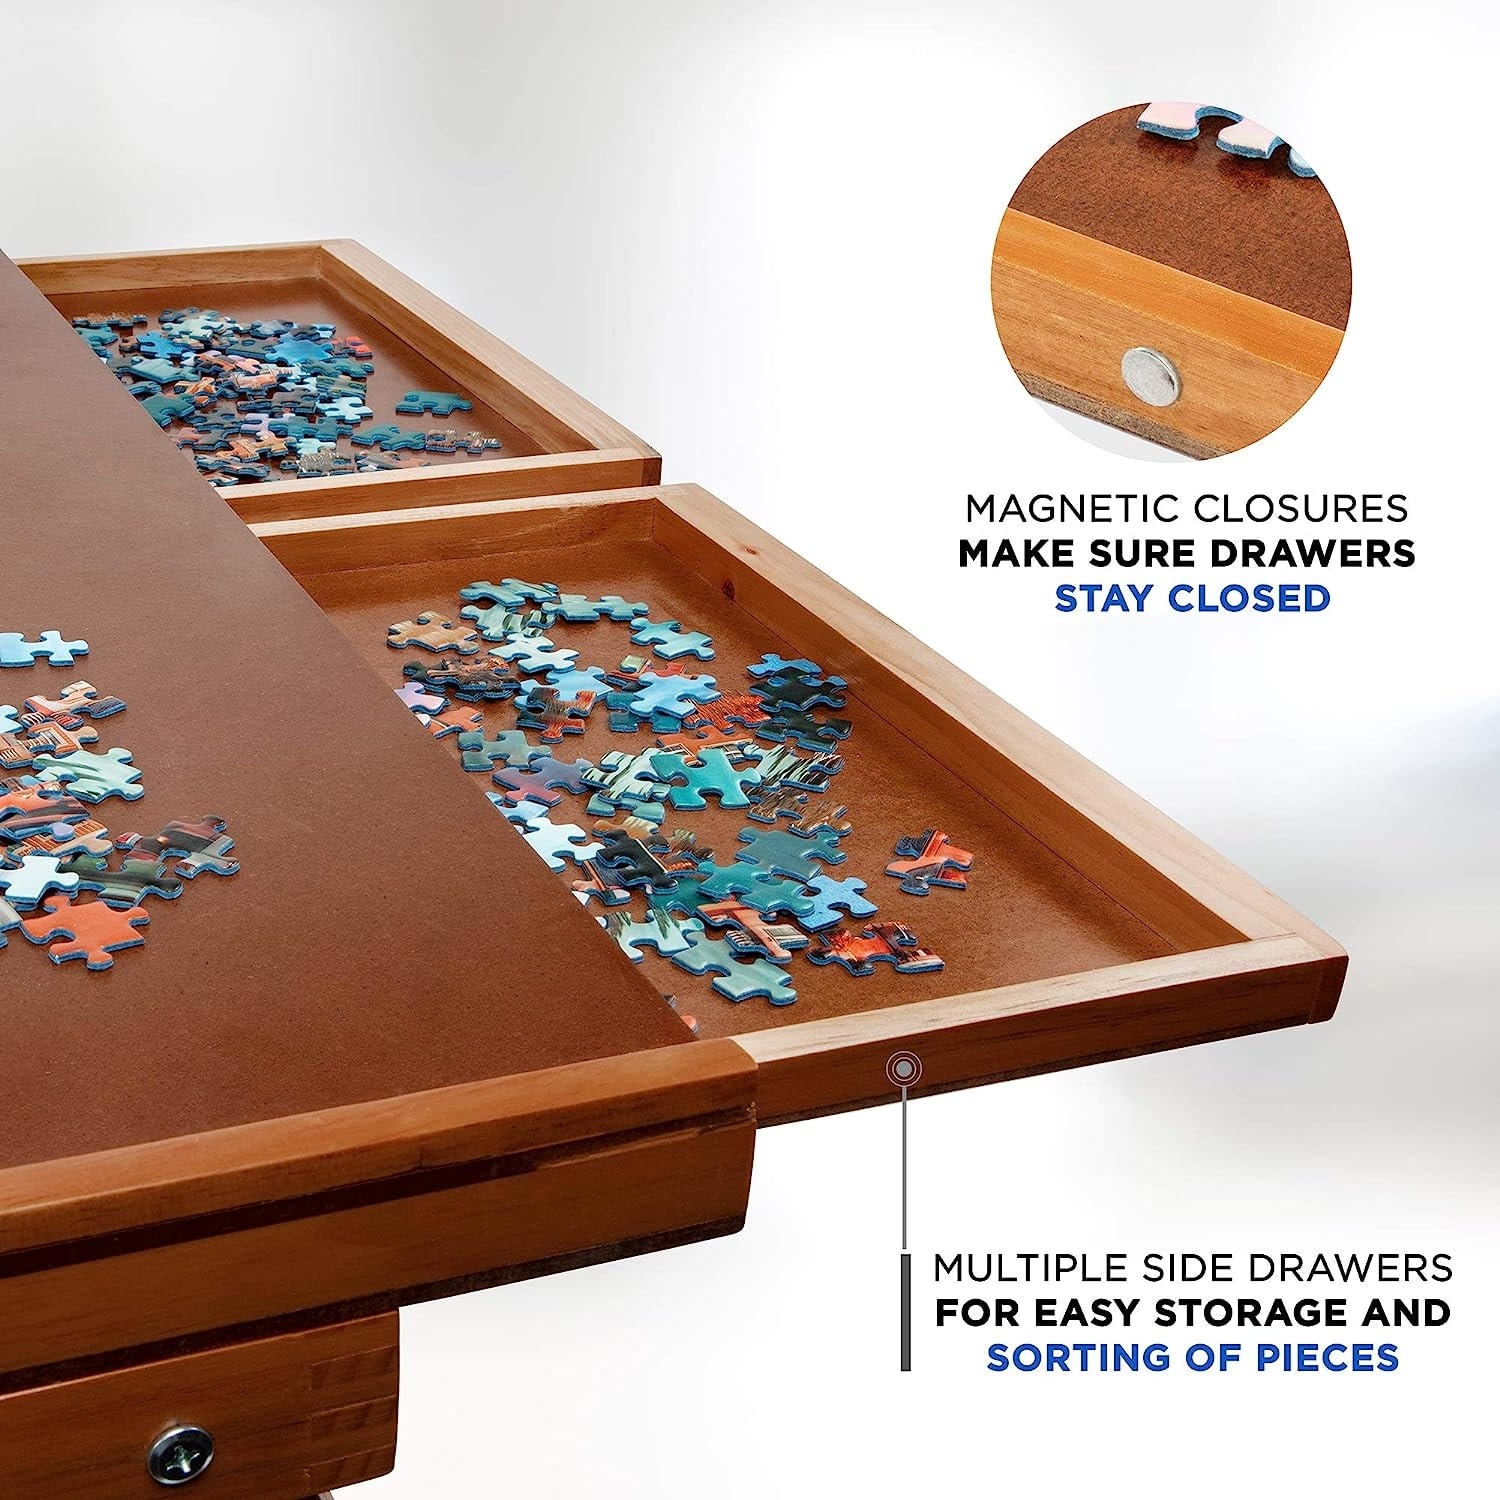 SkyMall 1500 Piece Puzzle Board W/Mat, Premium Wooden Jigsaw